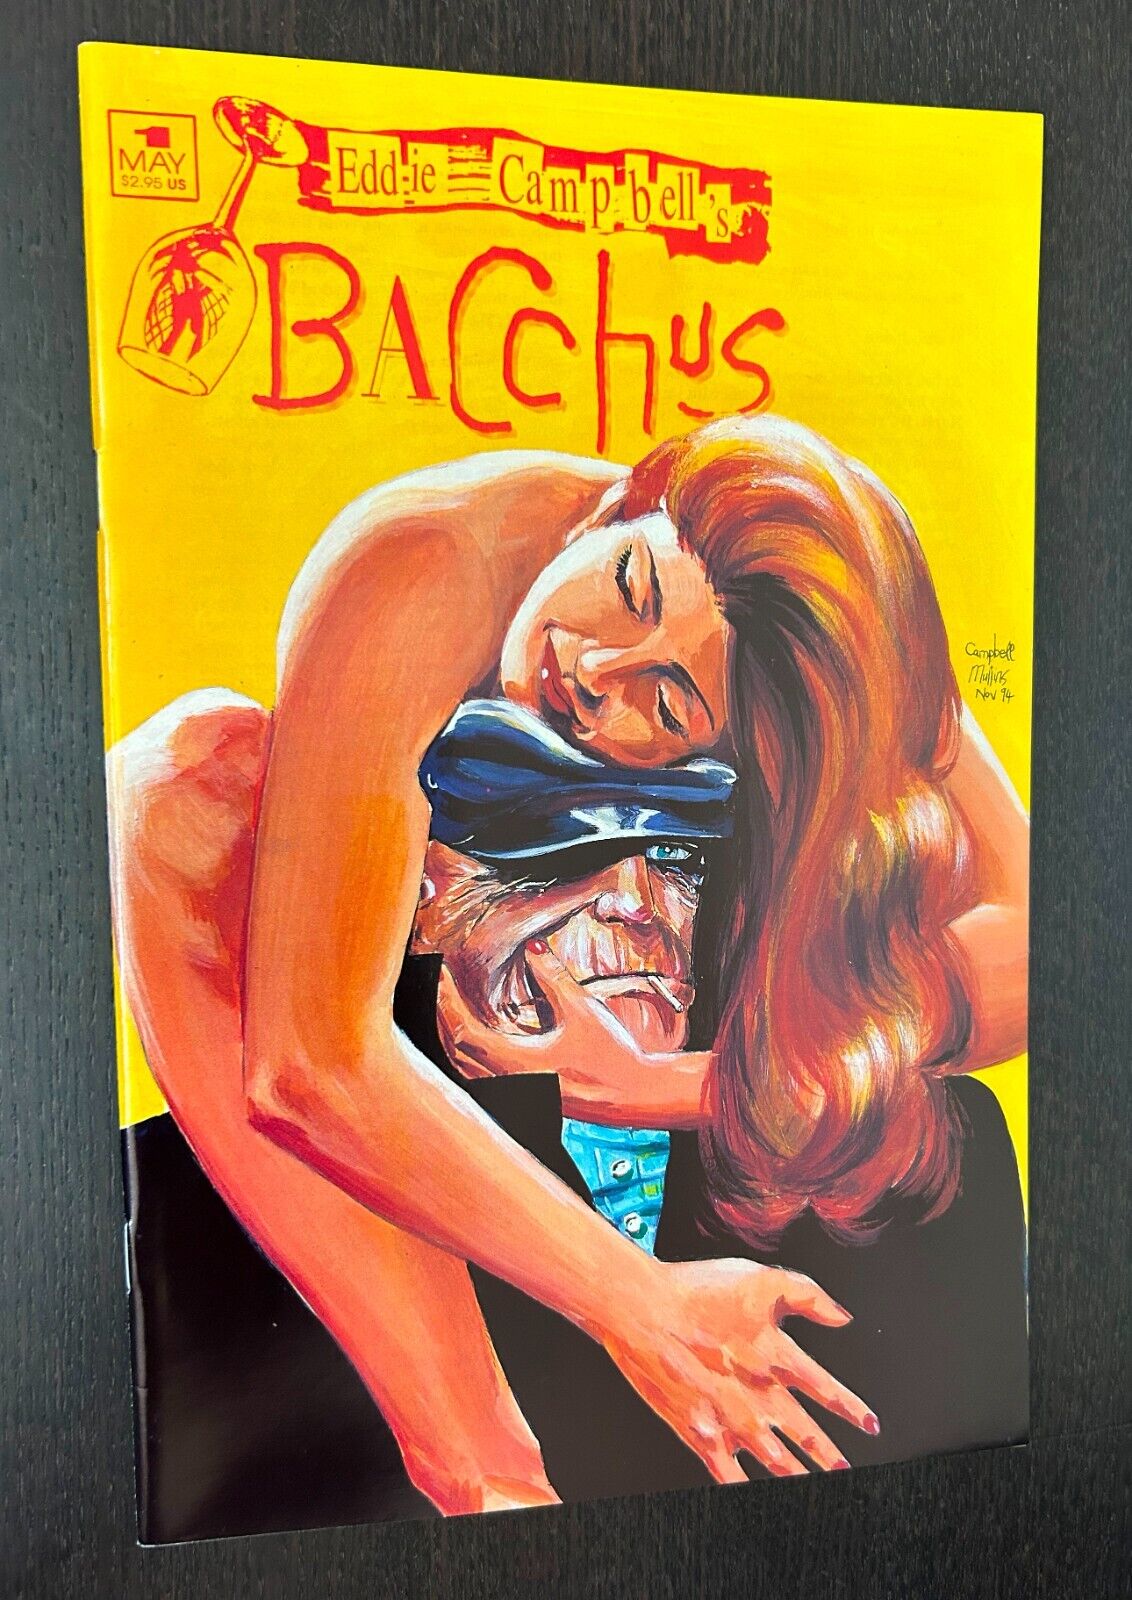 BACCHUS #1 (Eddie Campbell Comics 1995) -- VF/NM